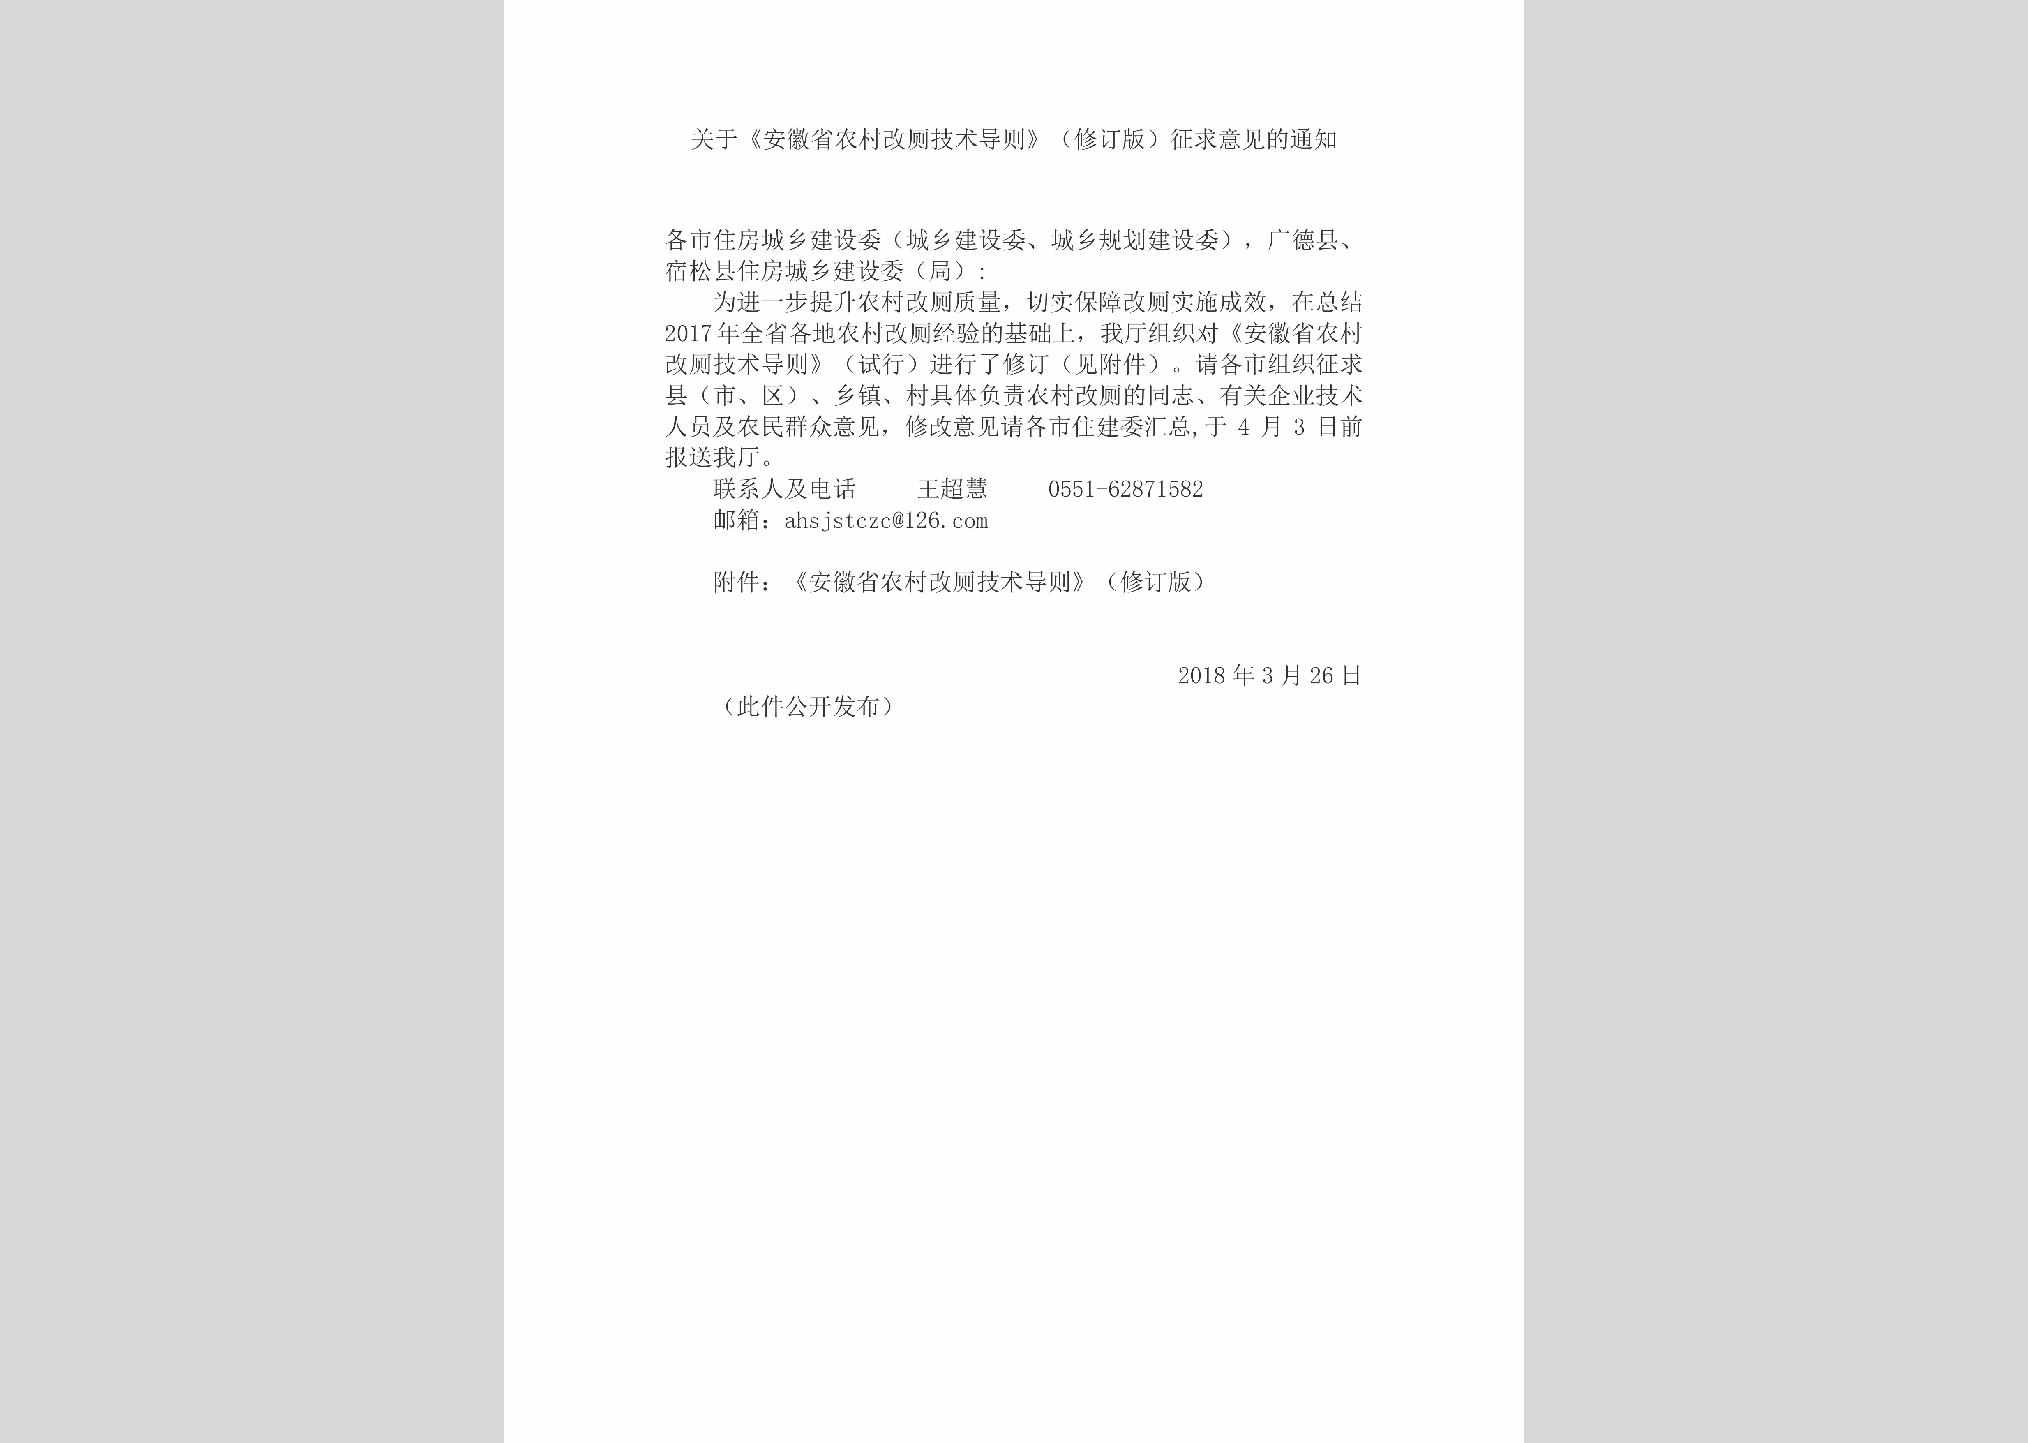 AH-NCGCJSDZ-2018：关于《安徽省农村改厕技术导则》（修订版）征求意见的通知